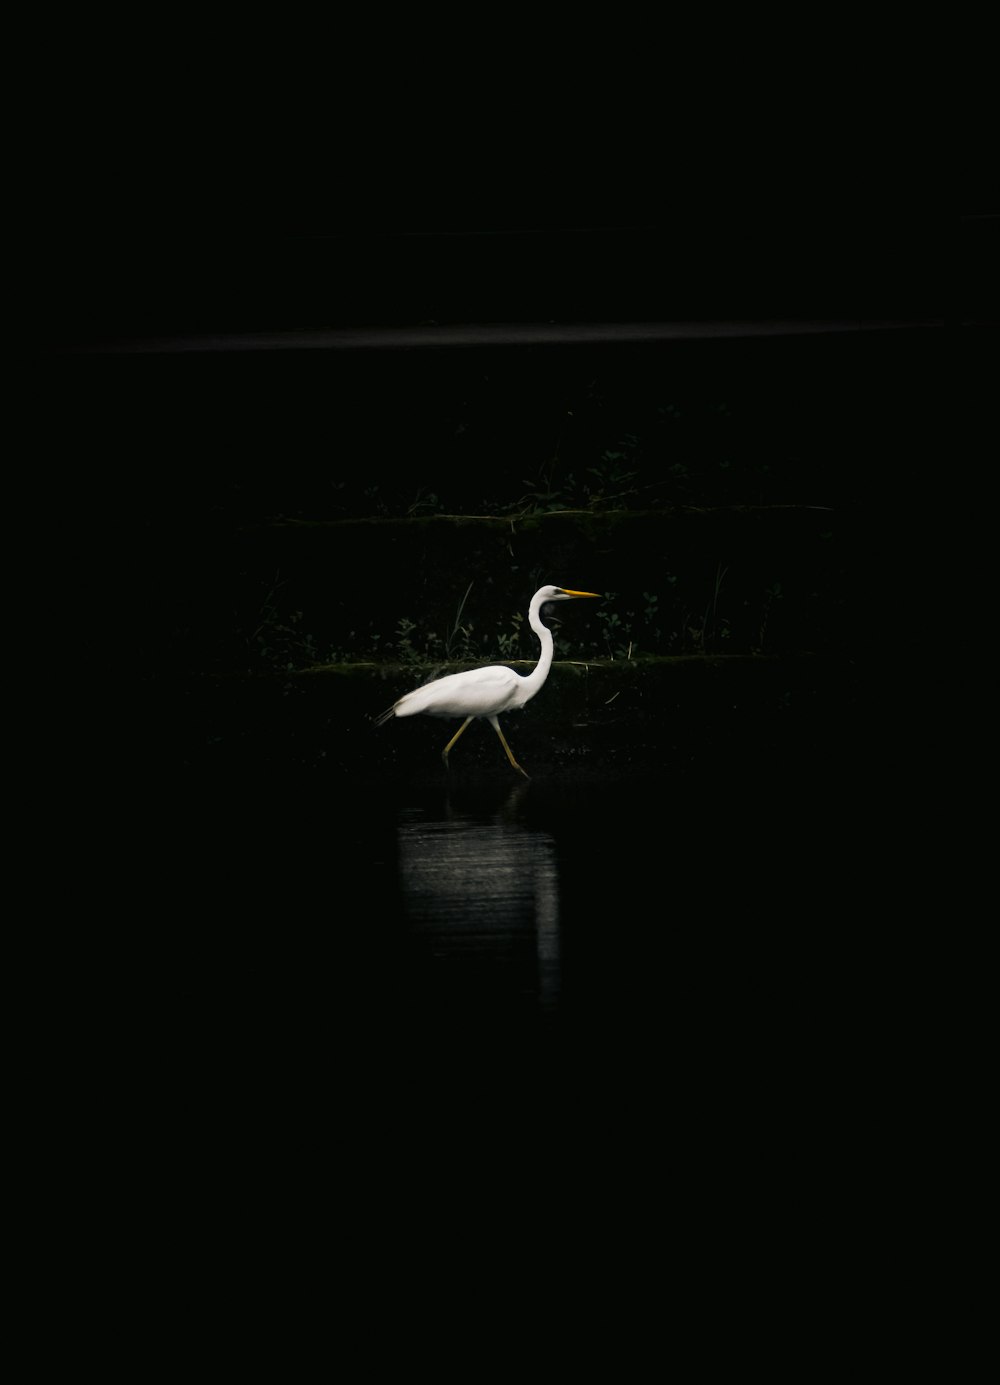 a white bird is standing in the dark water